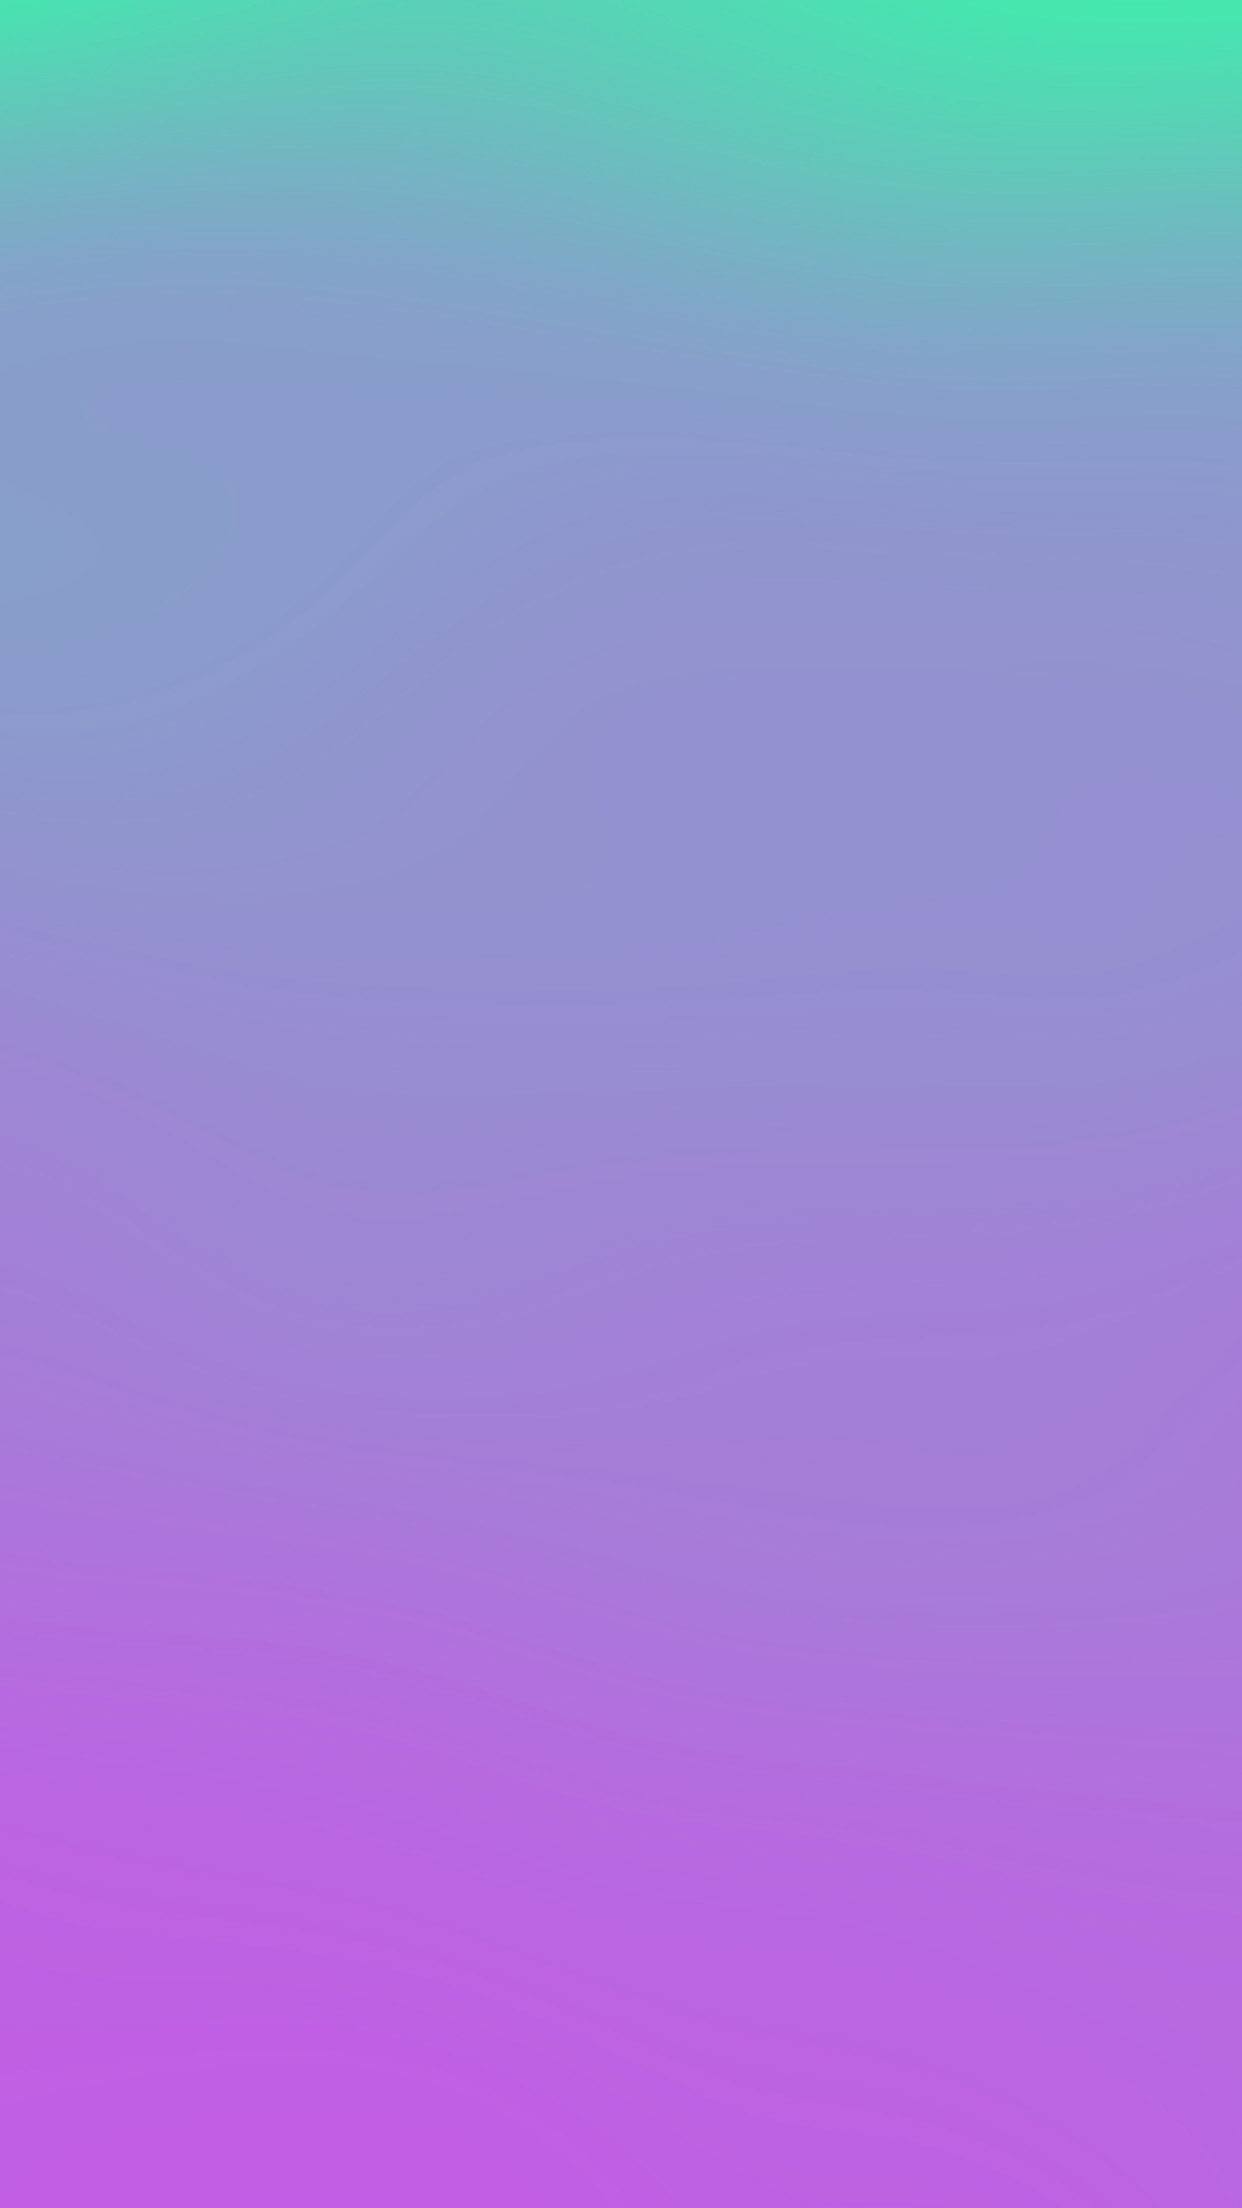 iPhone X wallpaper. purple green blur gradation